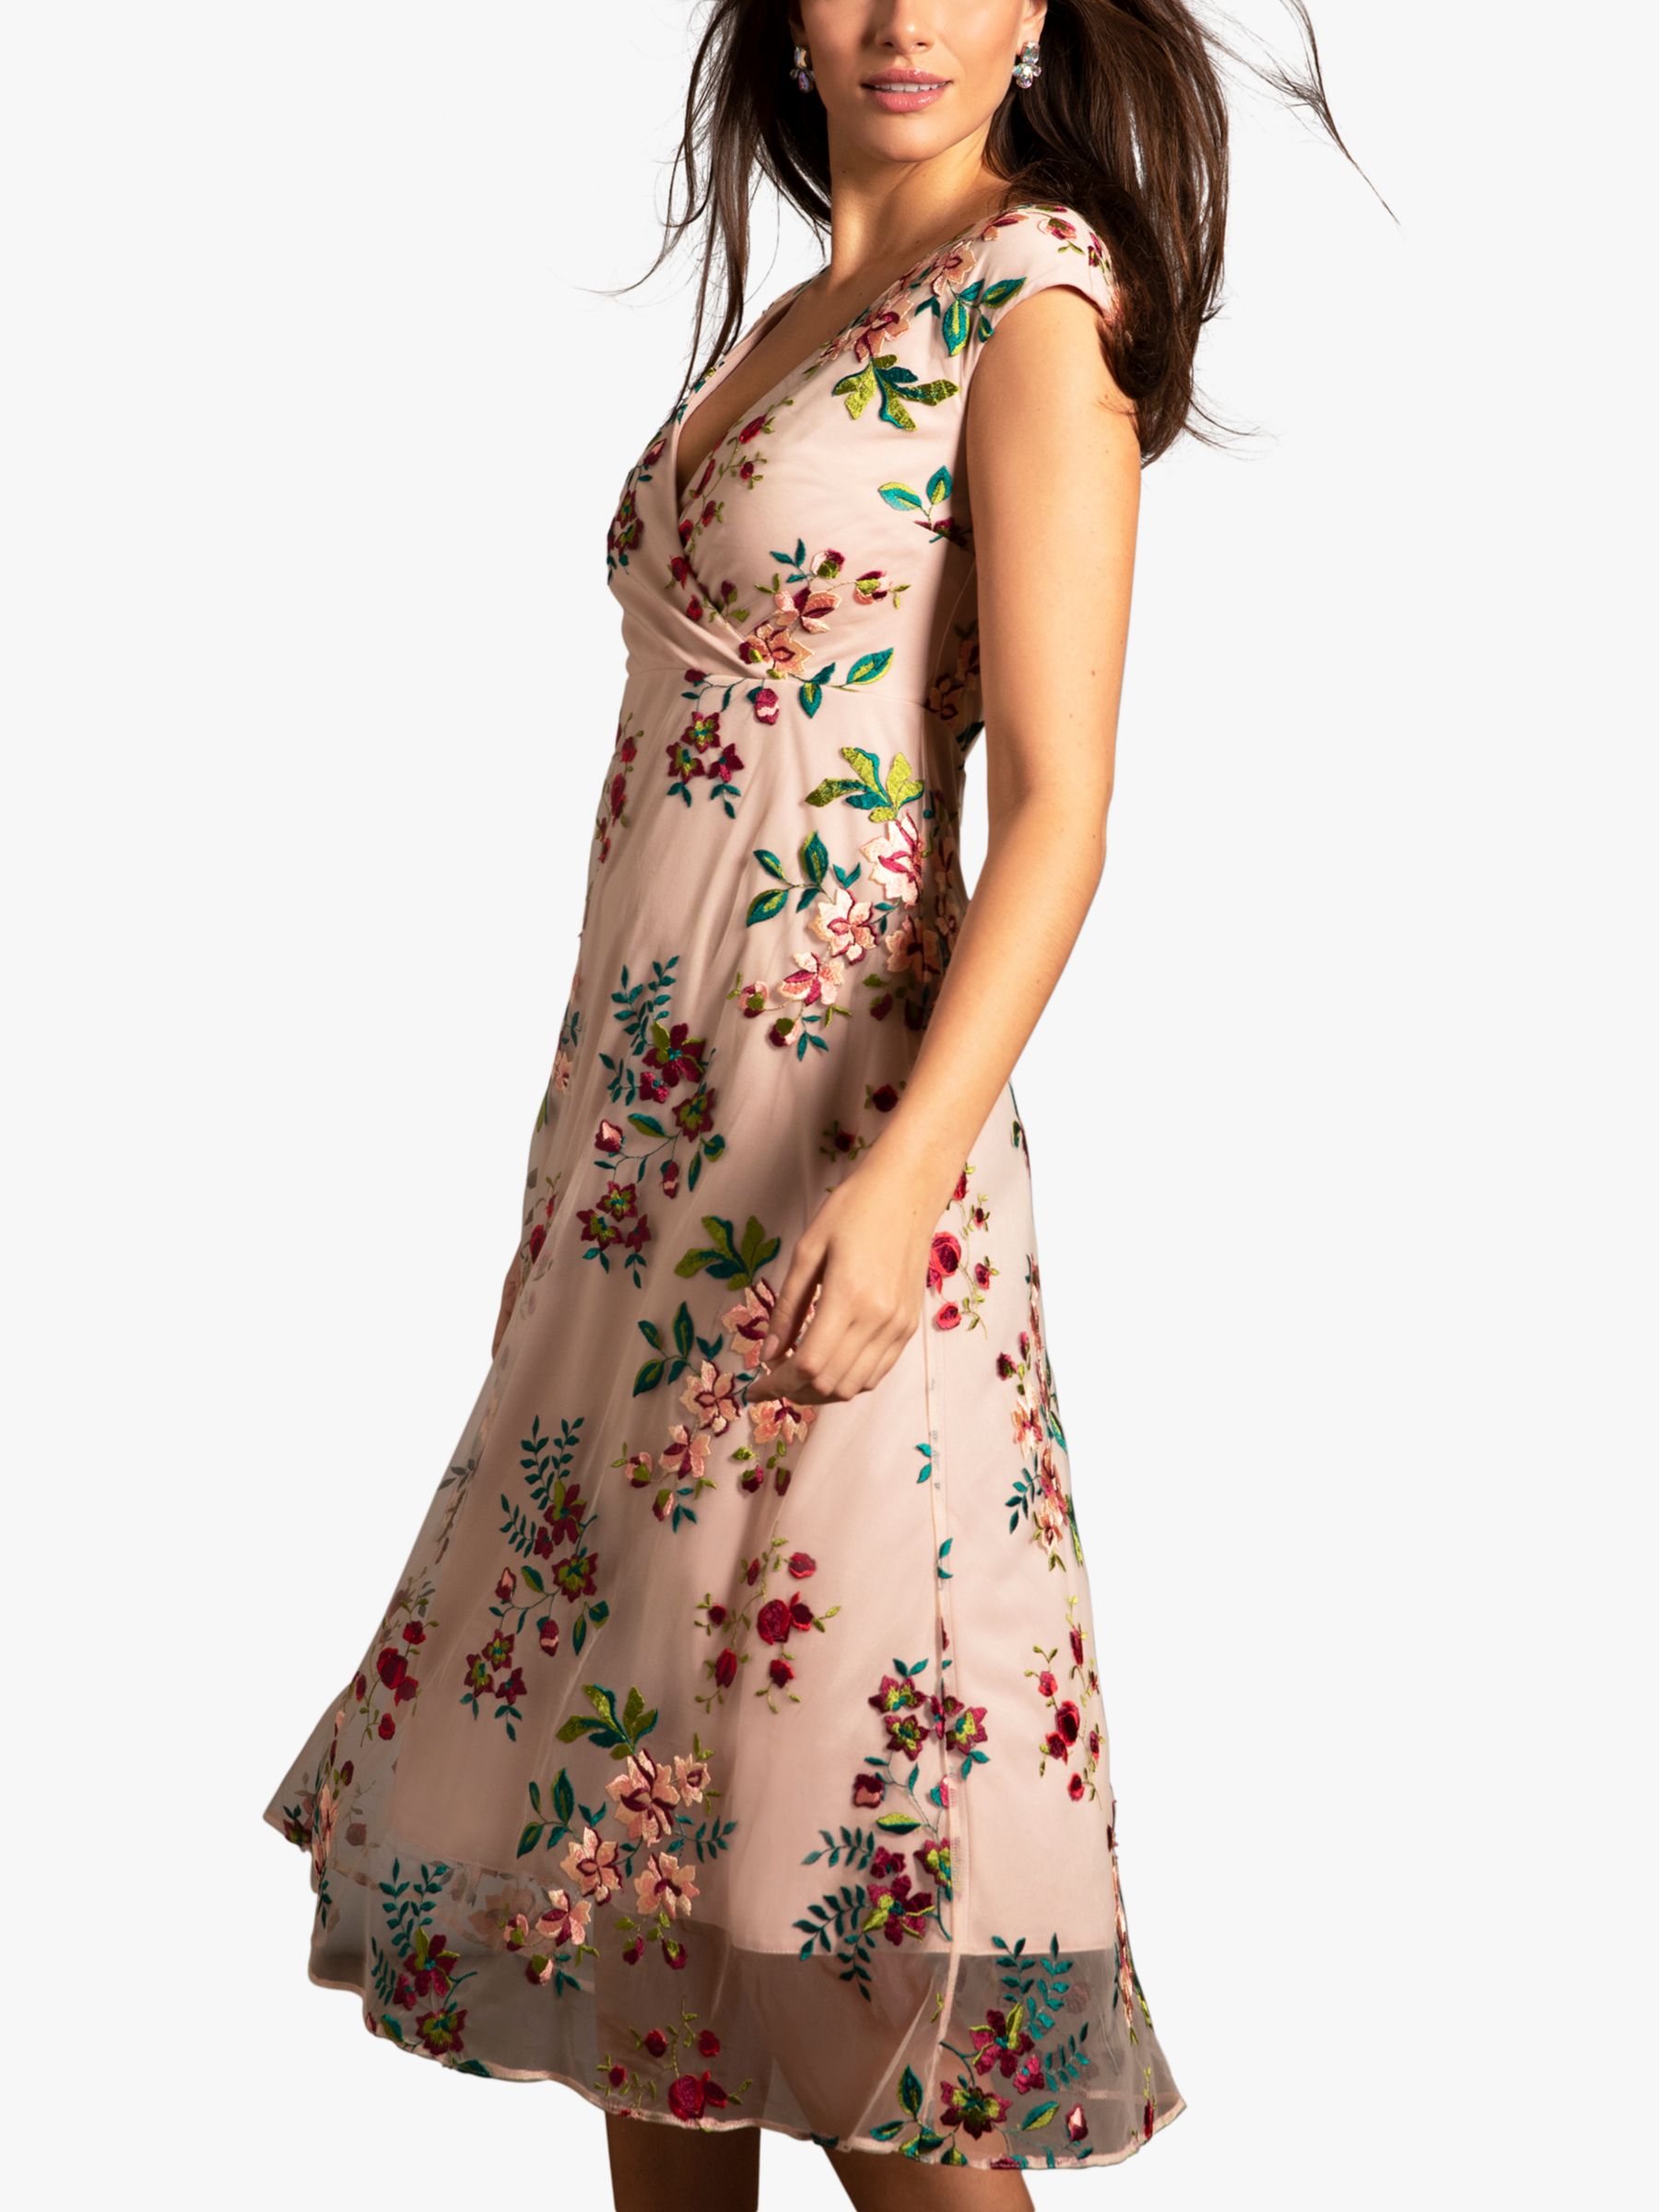 Alie Street Grace Midi Dress, Blushing Blooms, 6-8